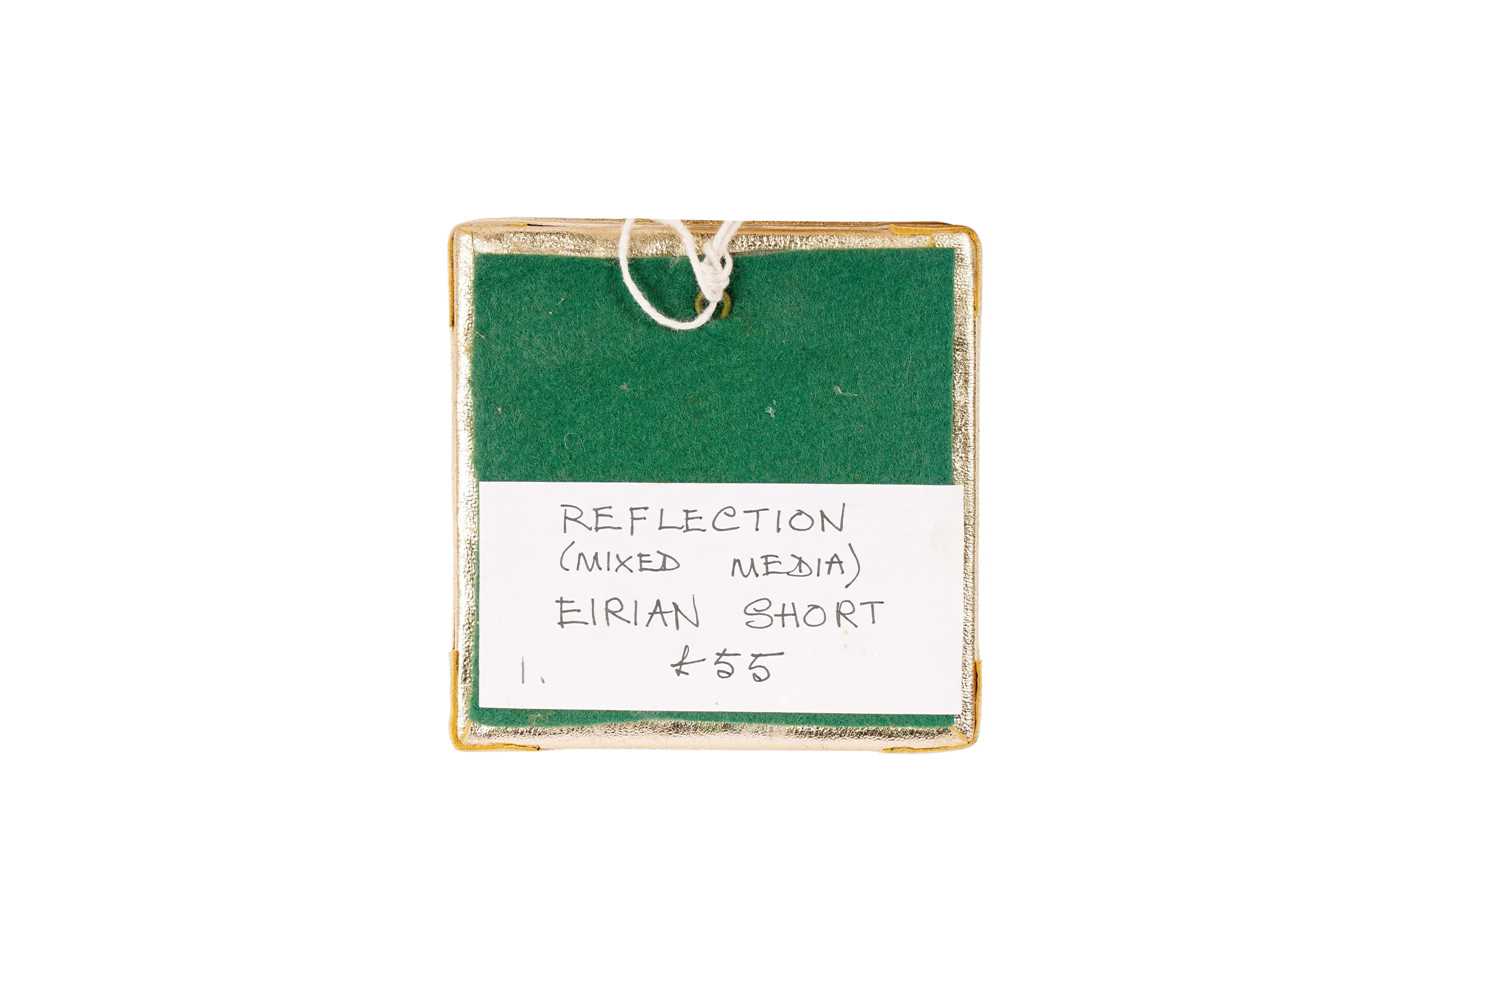 Eirian Short - Reflection | mixed media - Image 2 of 2